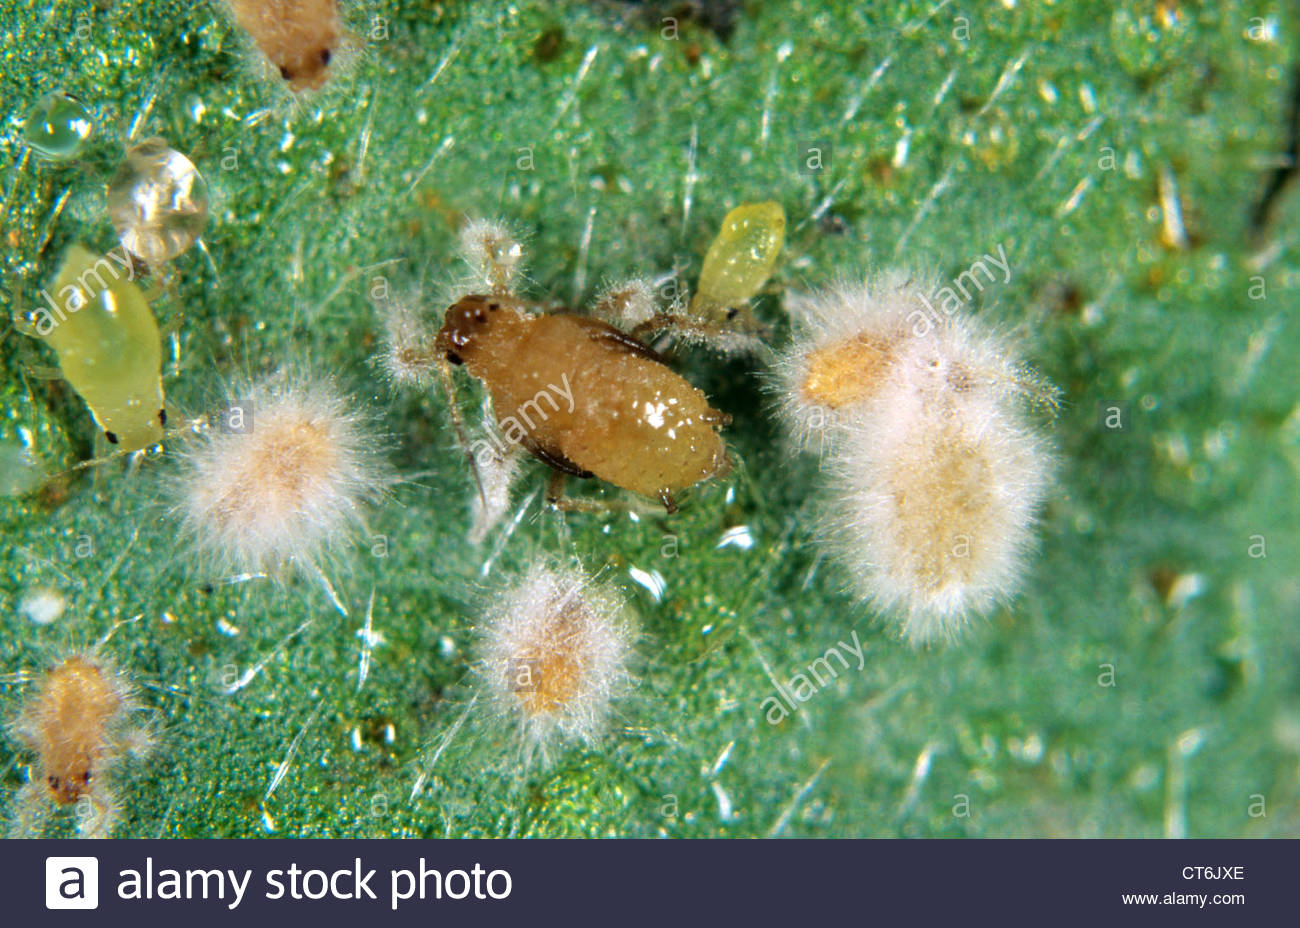 entomopathogenic fungi pest control